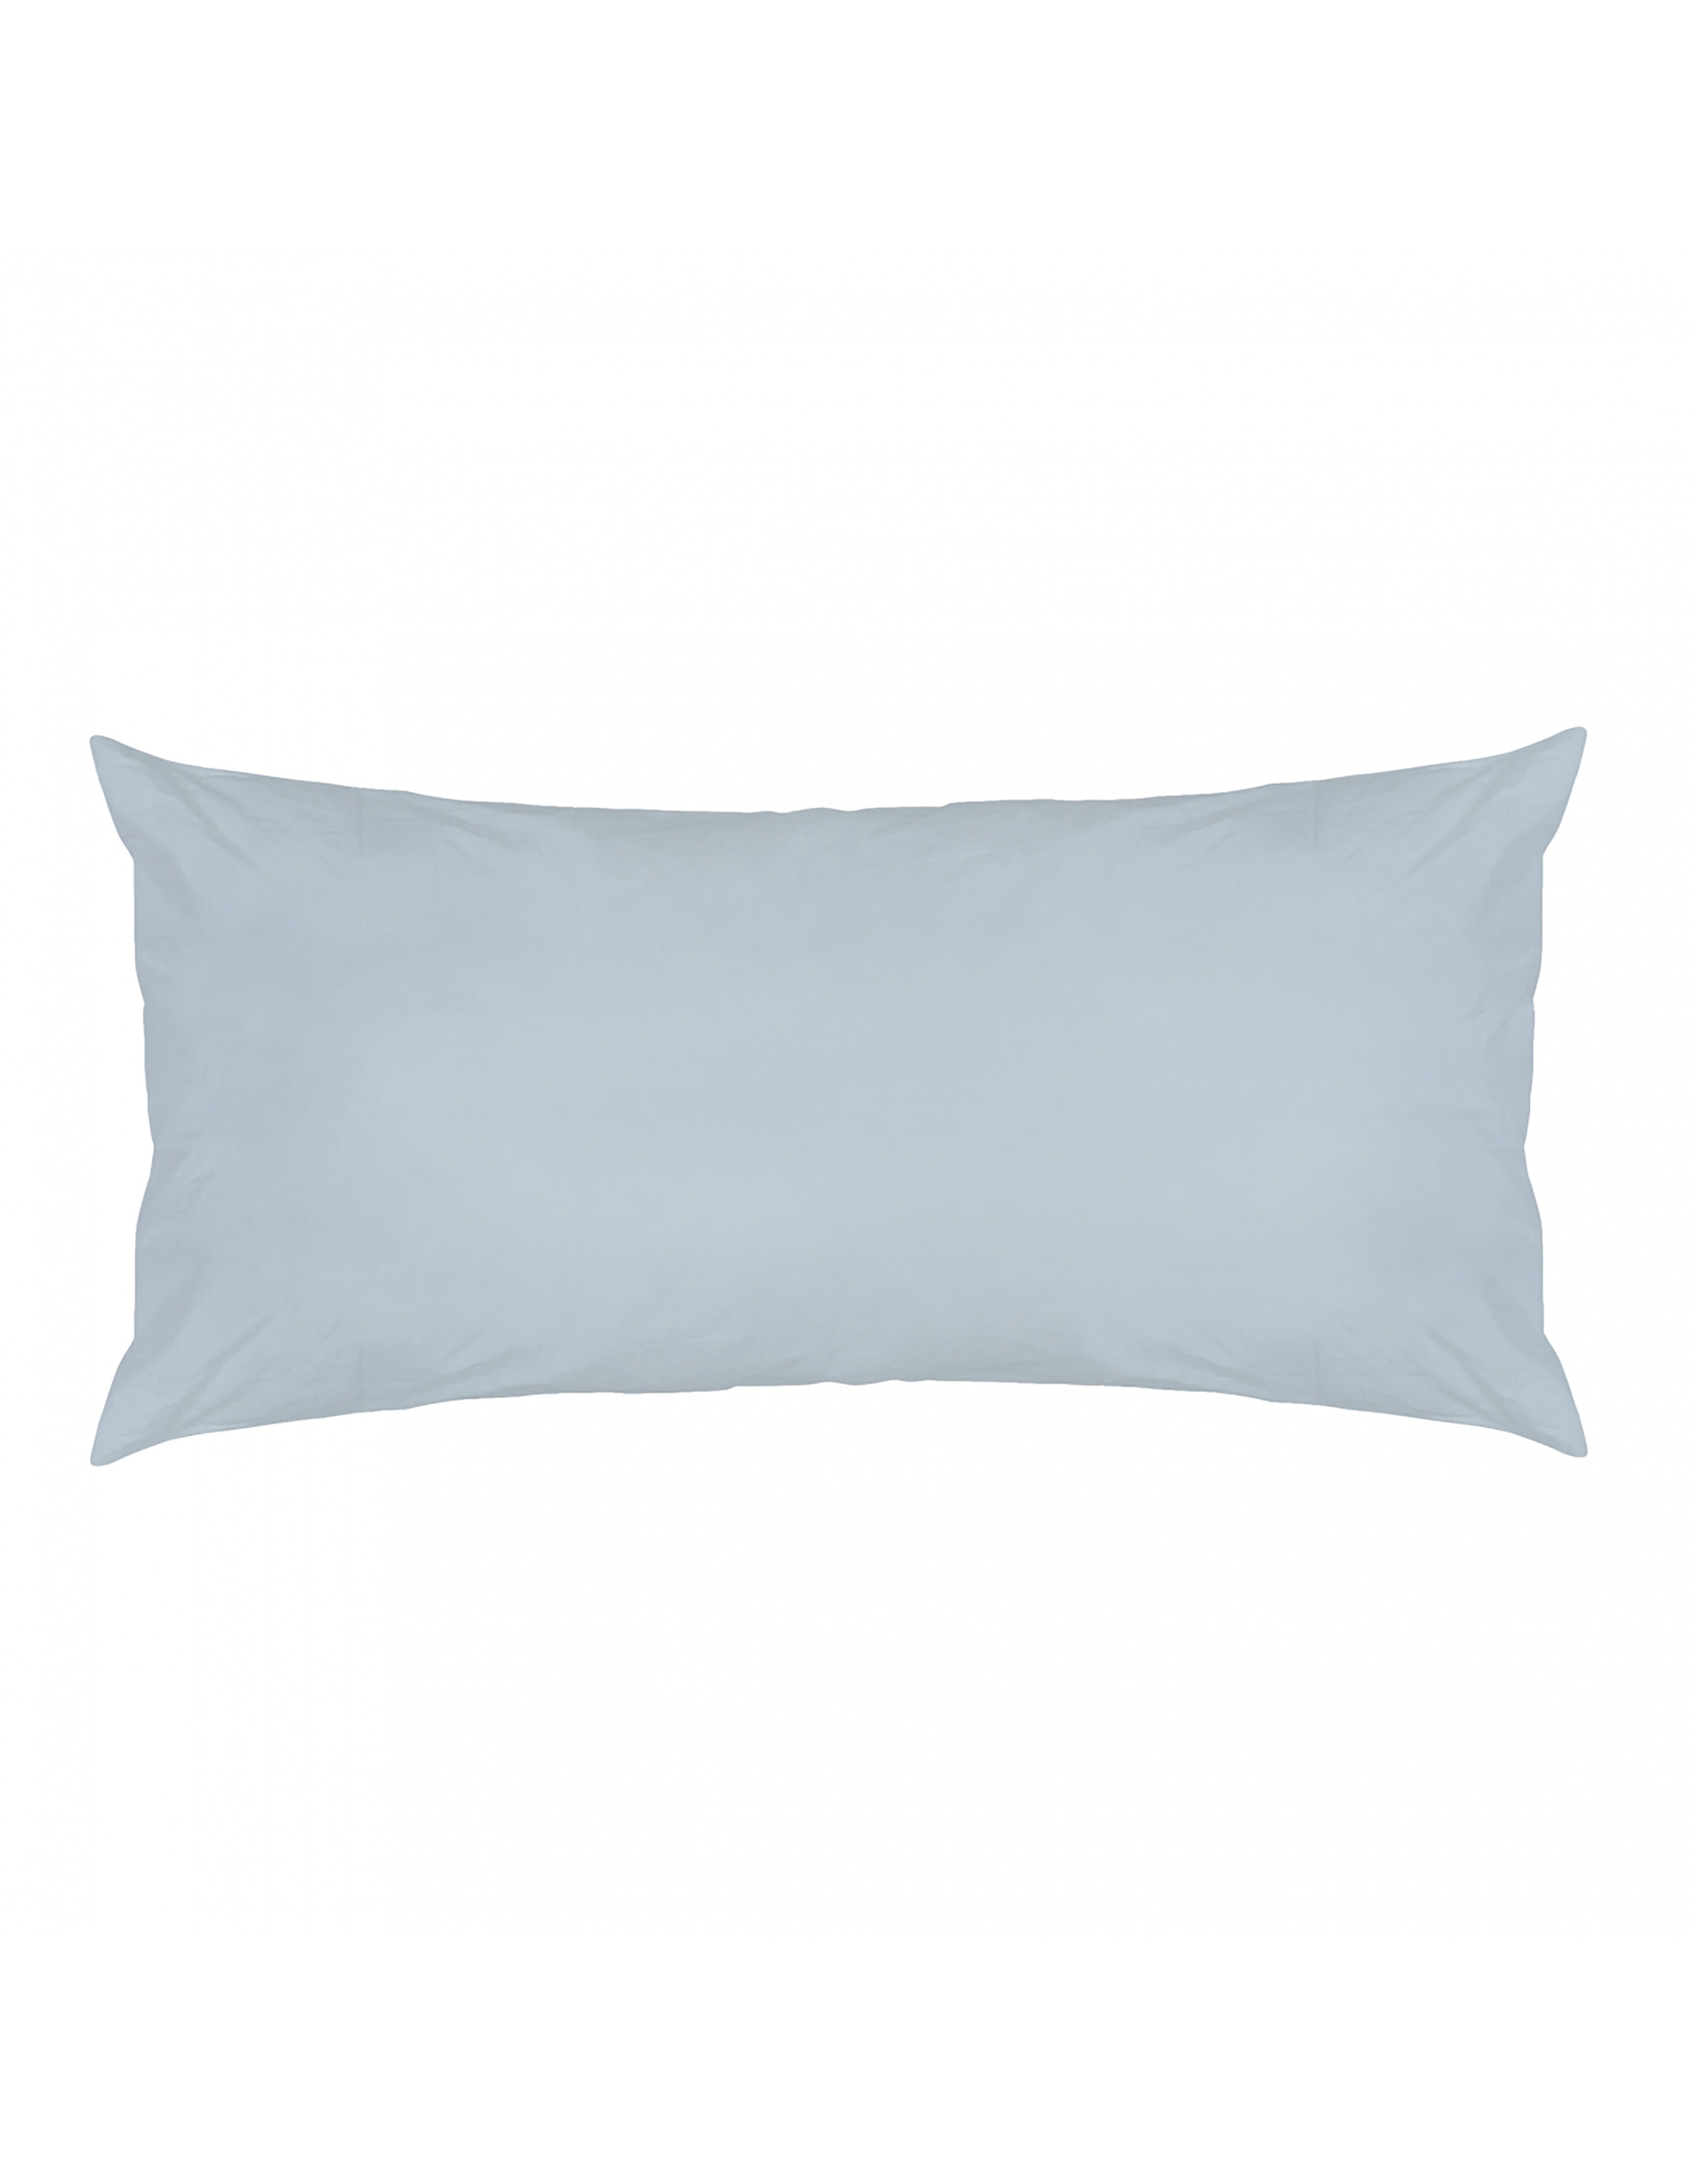 Funda de almohada wash grament algodón 200 hilos azul sky 45 x 110 cm